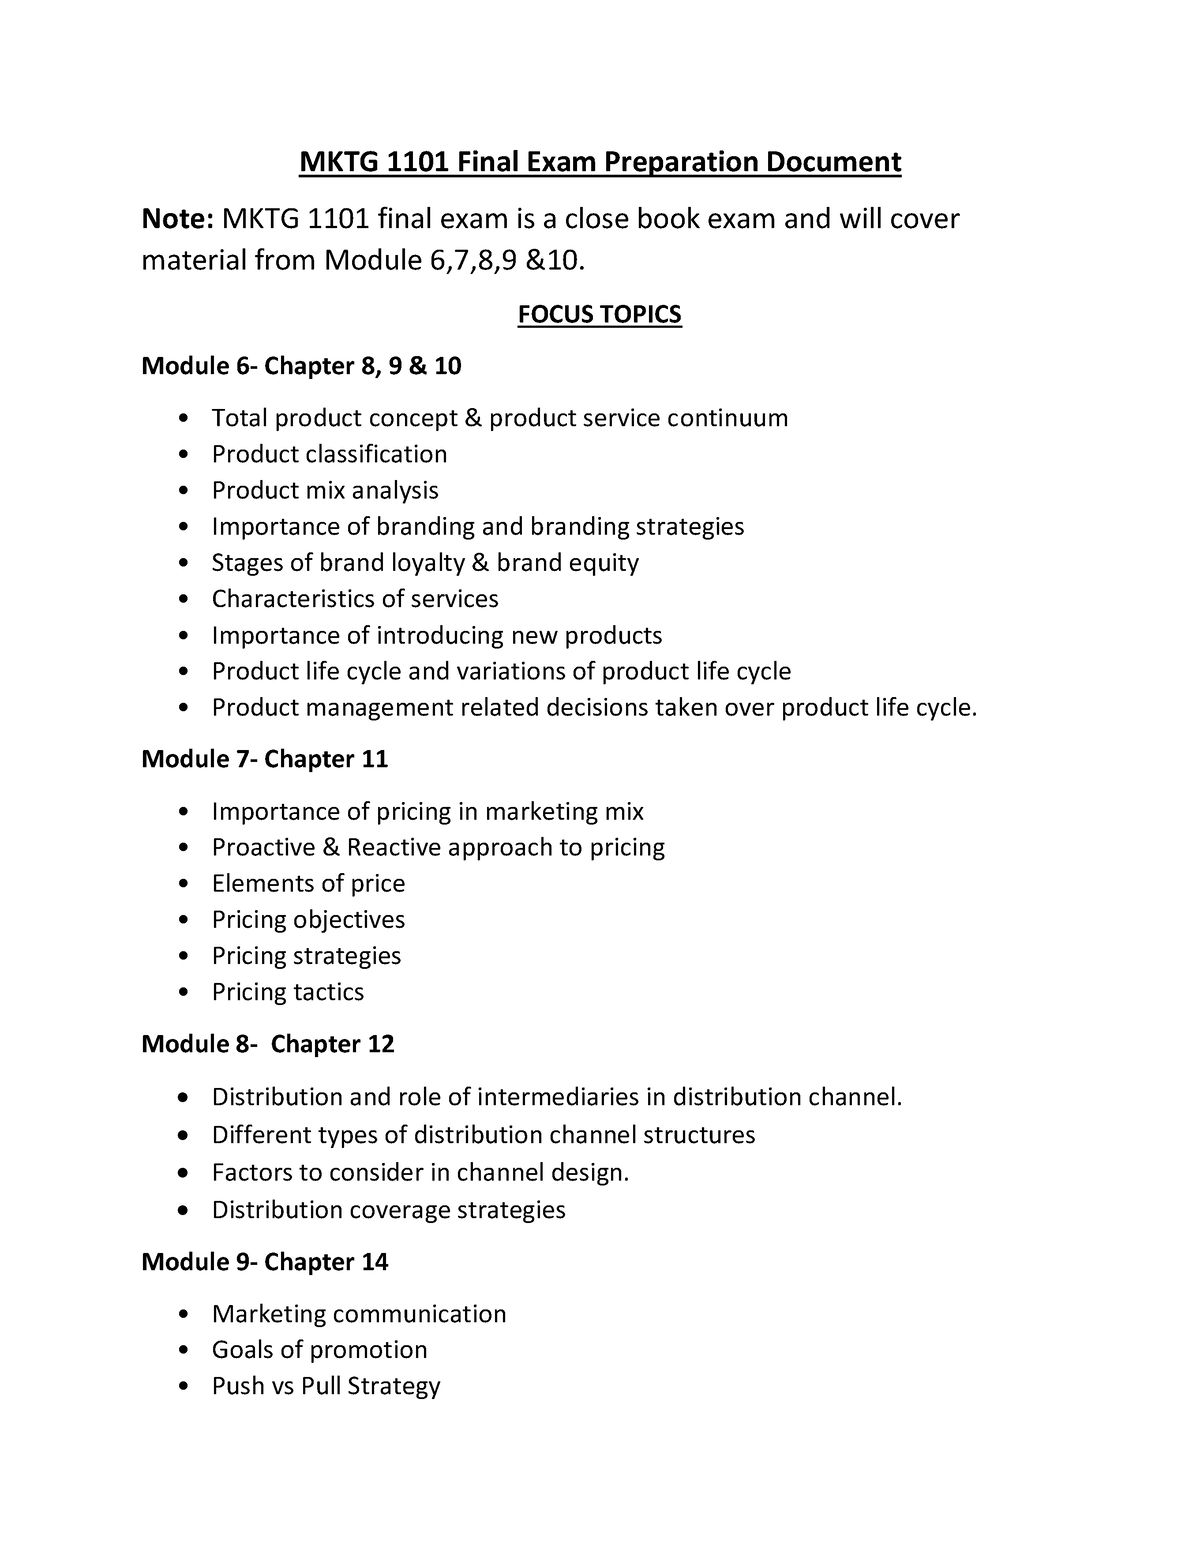 MKTG1101 Final Exam Prep document - MKTG 1101 Final Exam Preparation